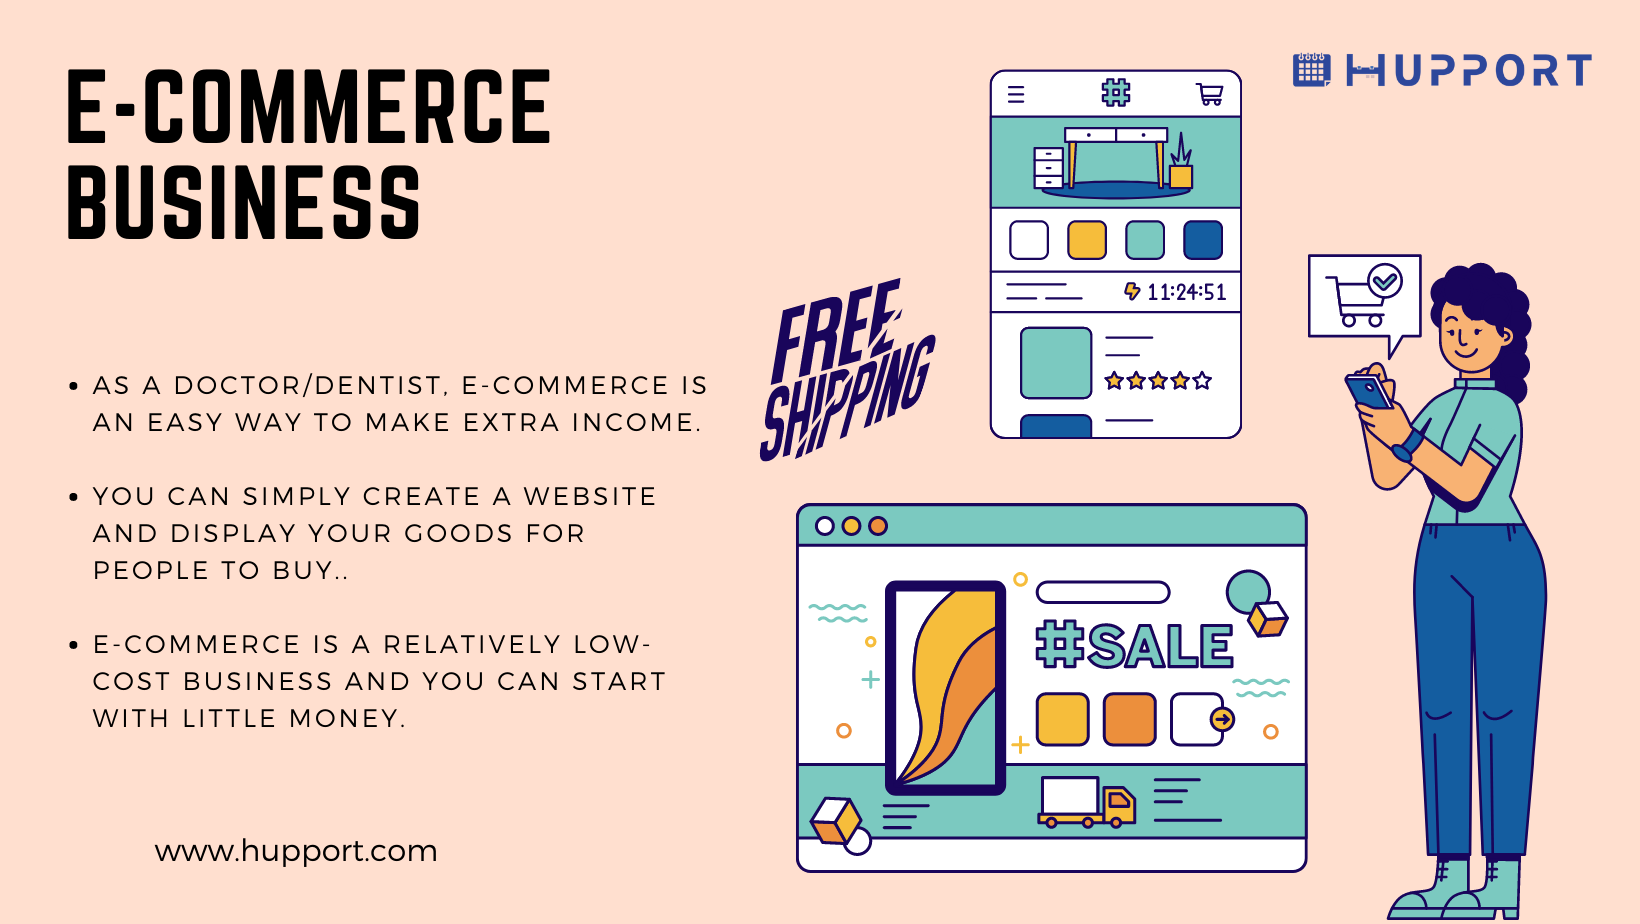 E-commerce business